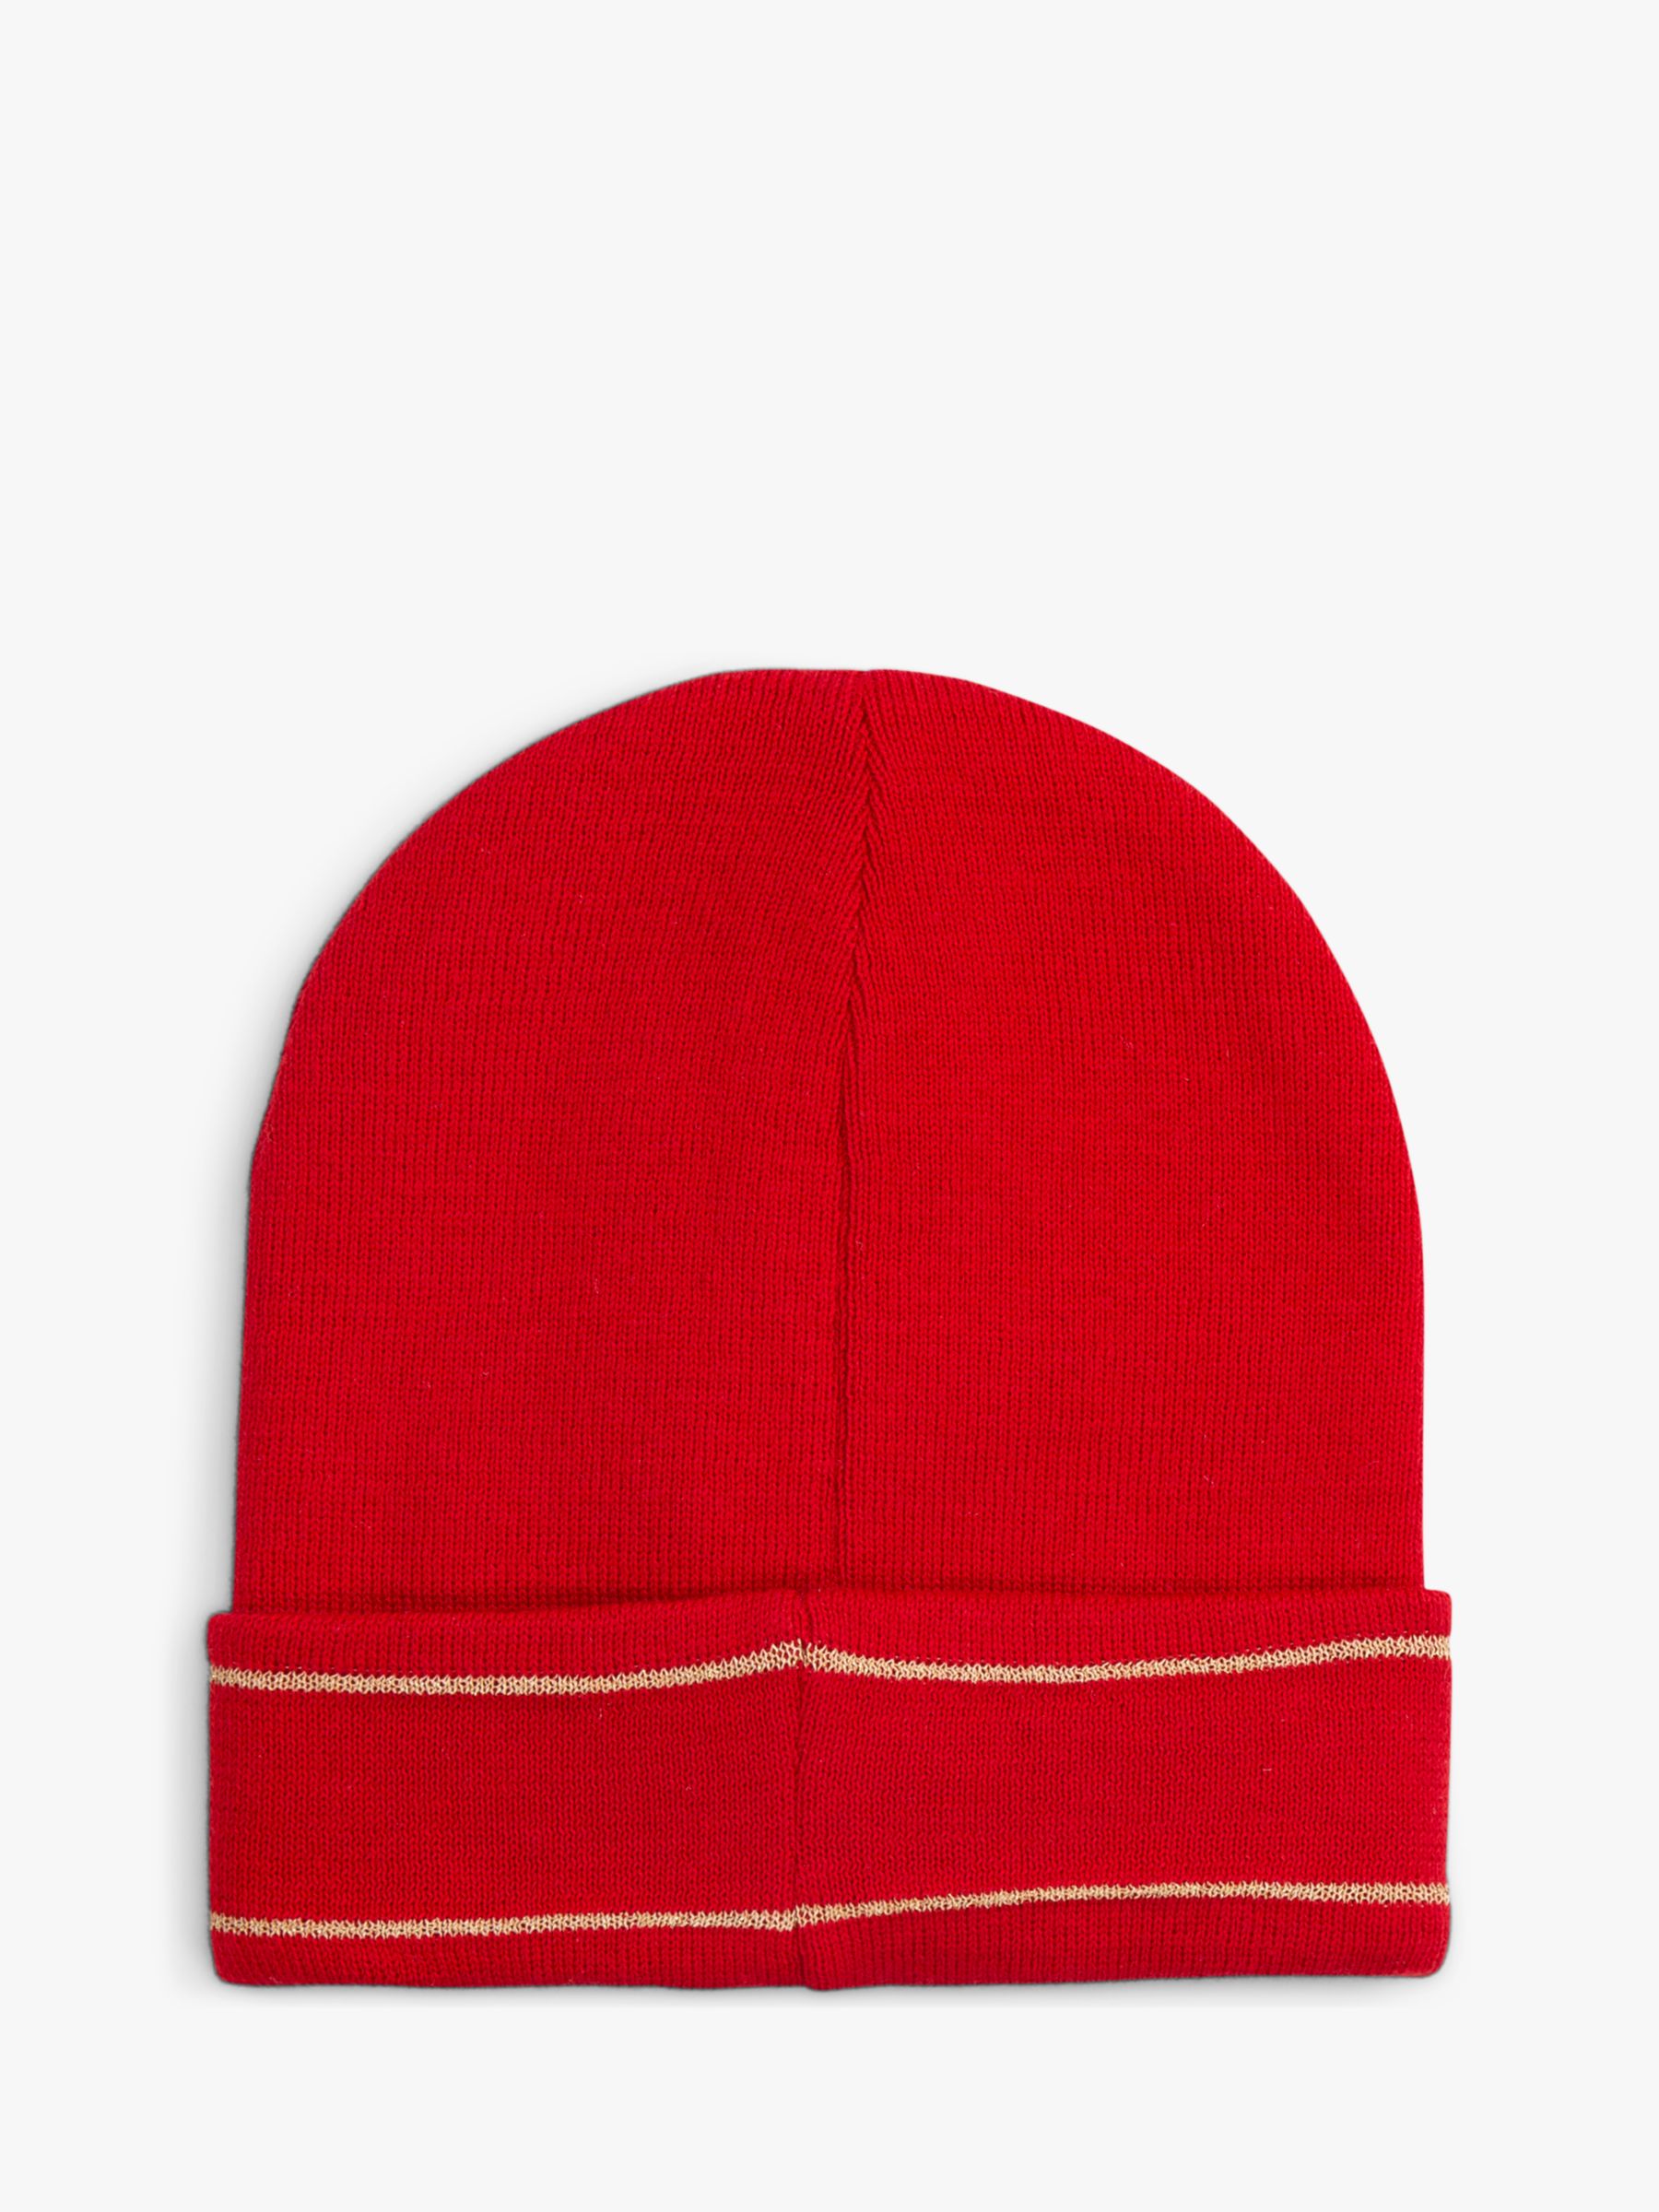 Buy Michael Kors Kids' Logo Turn Up Beanie Hat, Bright Red Online at johnlewis.com